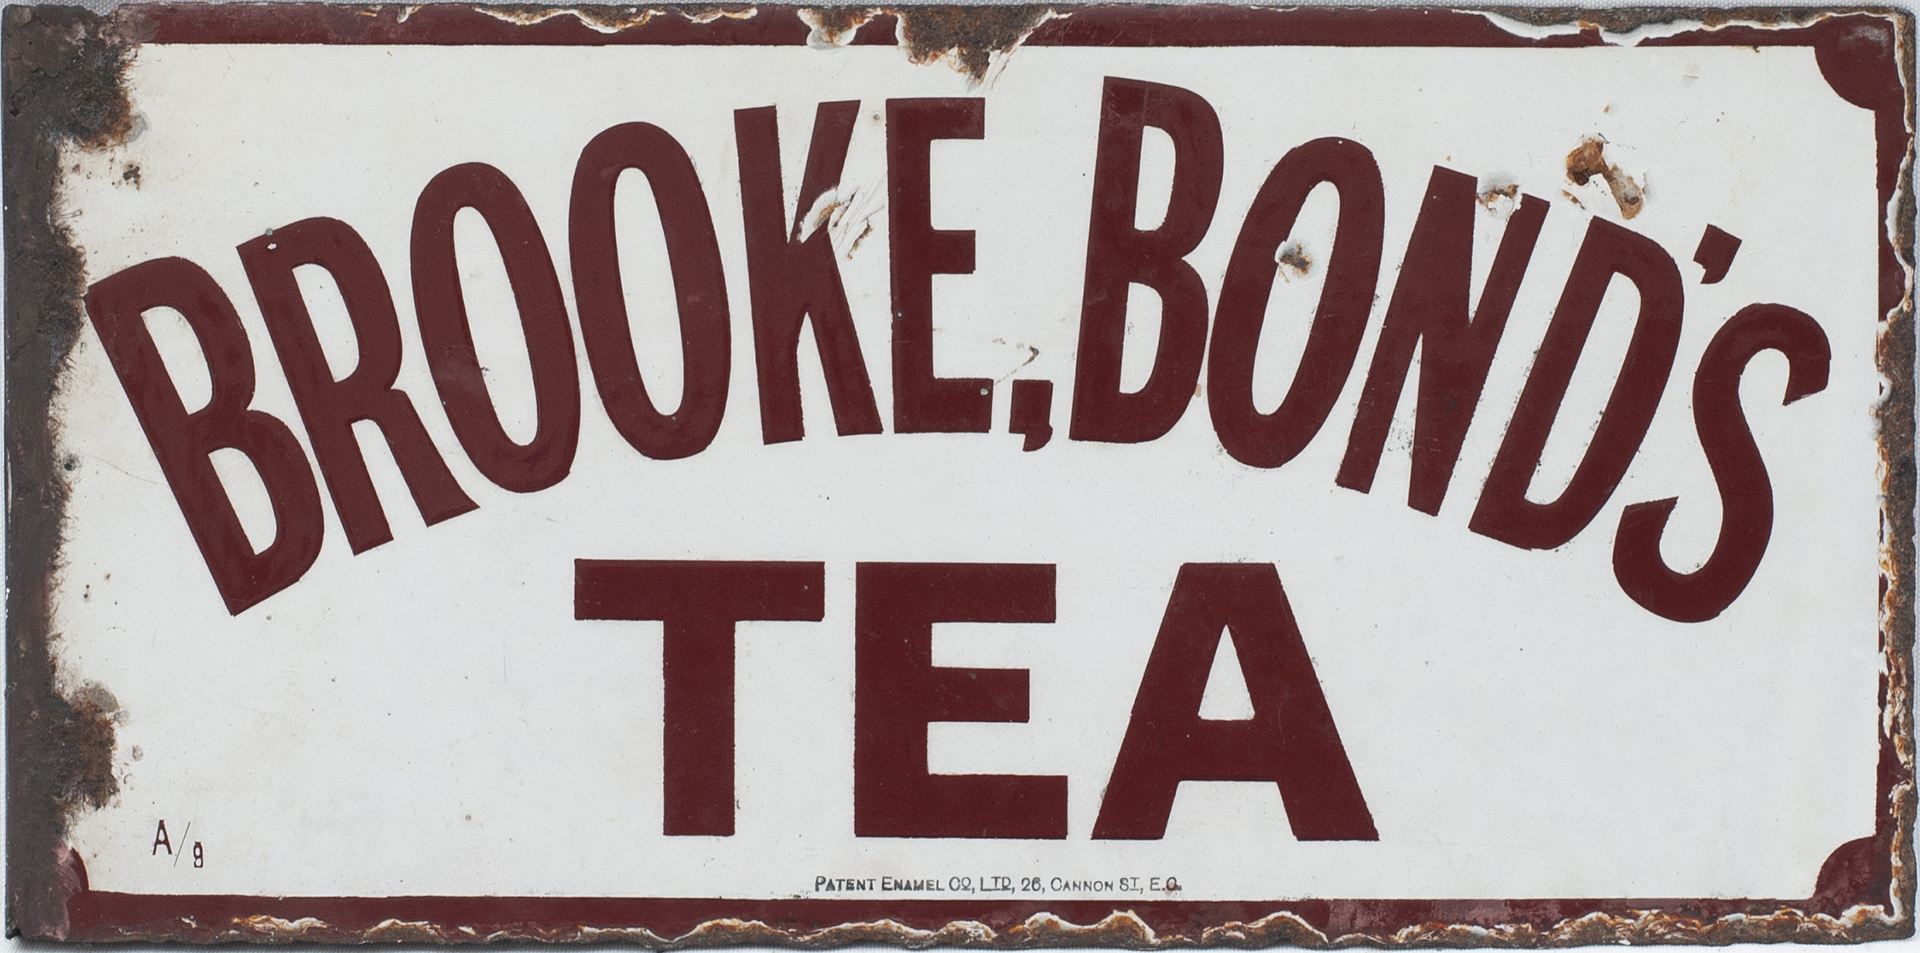 Brooke Bond's Tea